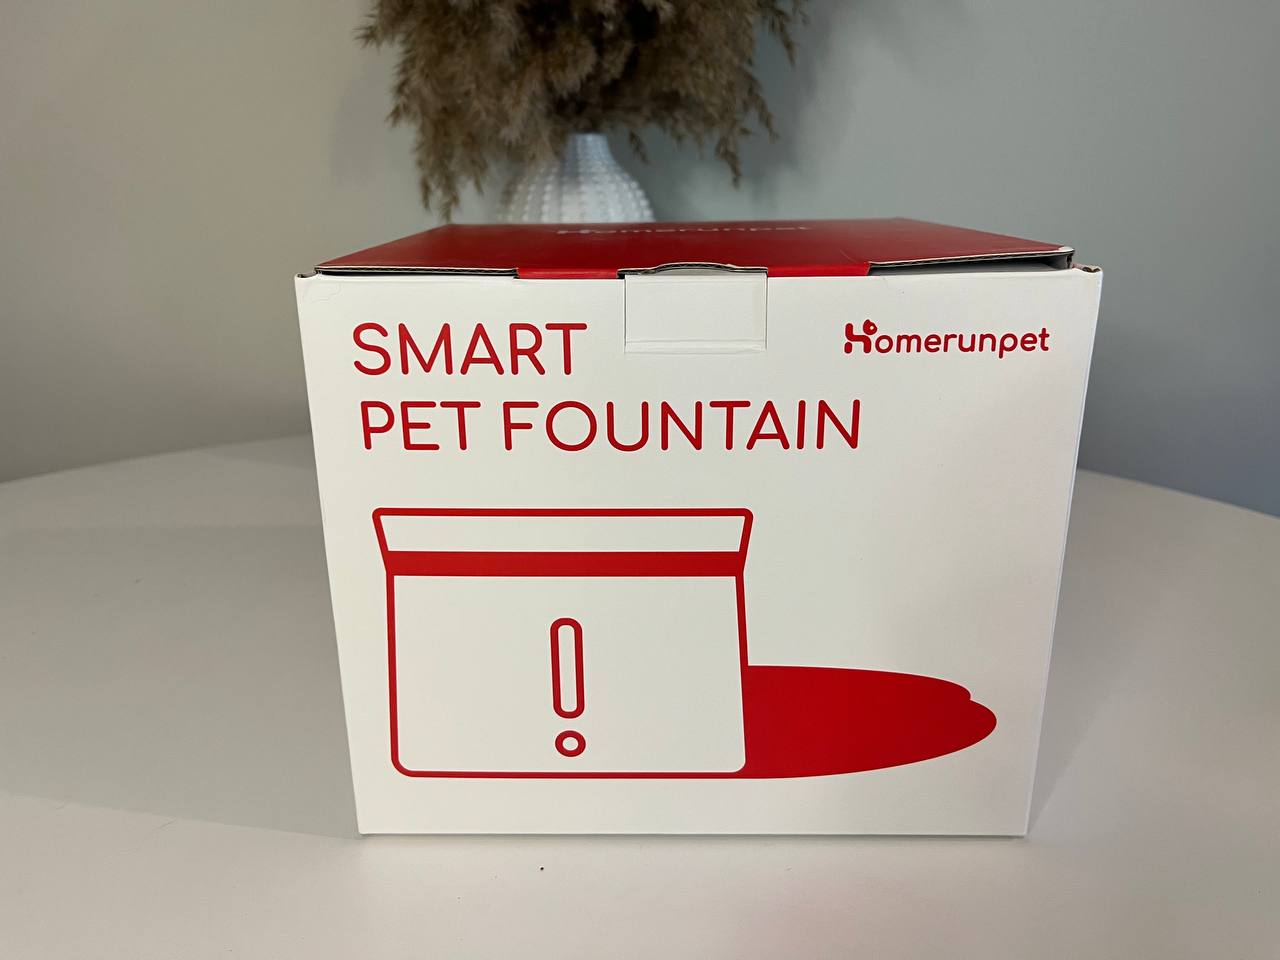 Brand new box with Homerunpet Cat Water Fountain